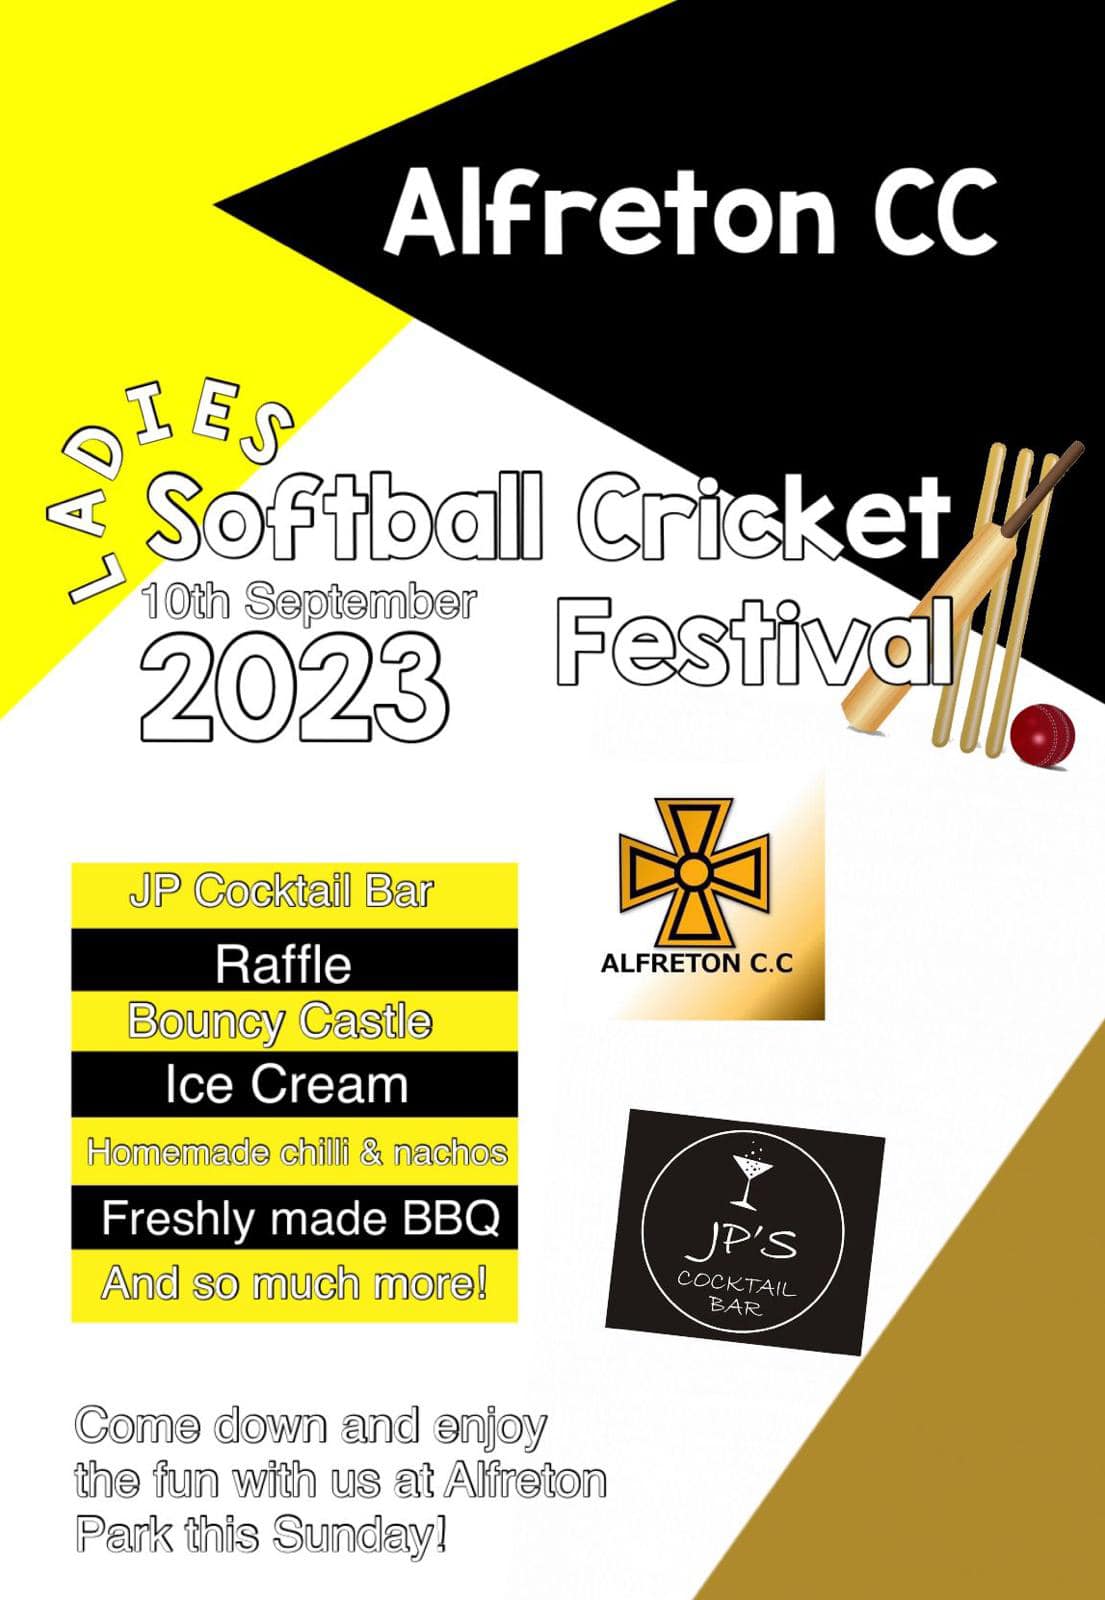 Women's softball festival at Alfreton Cricket Club - September 2023